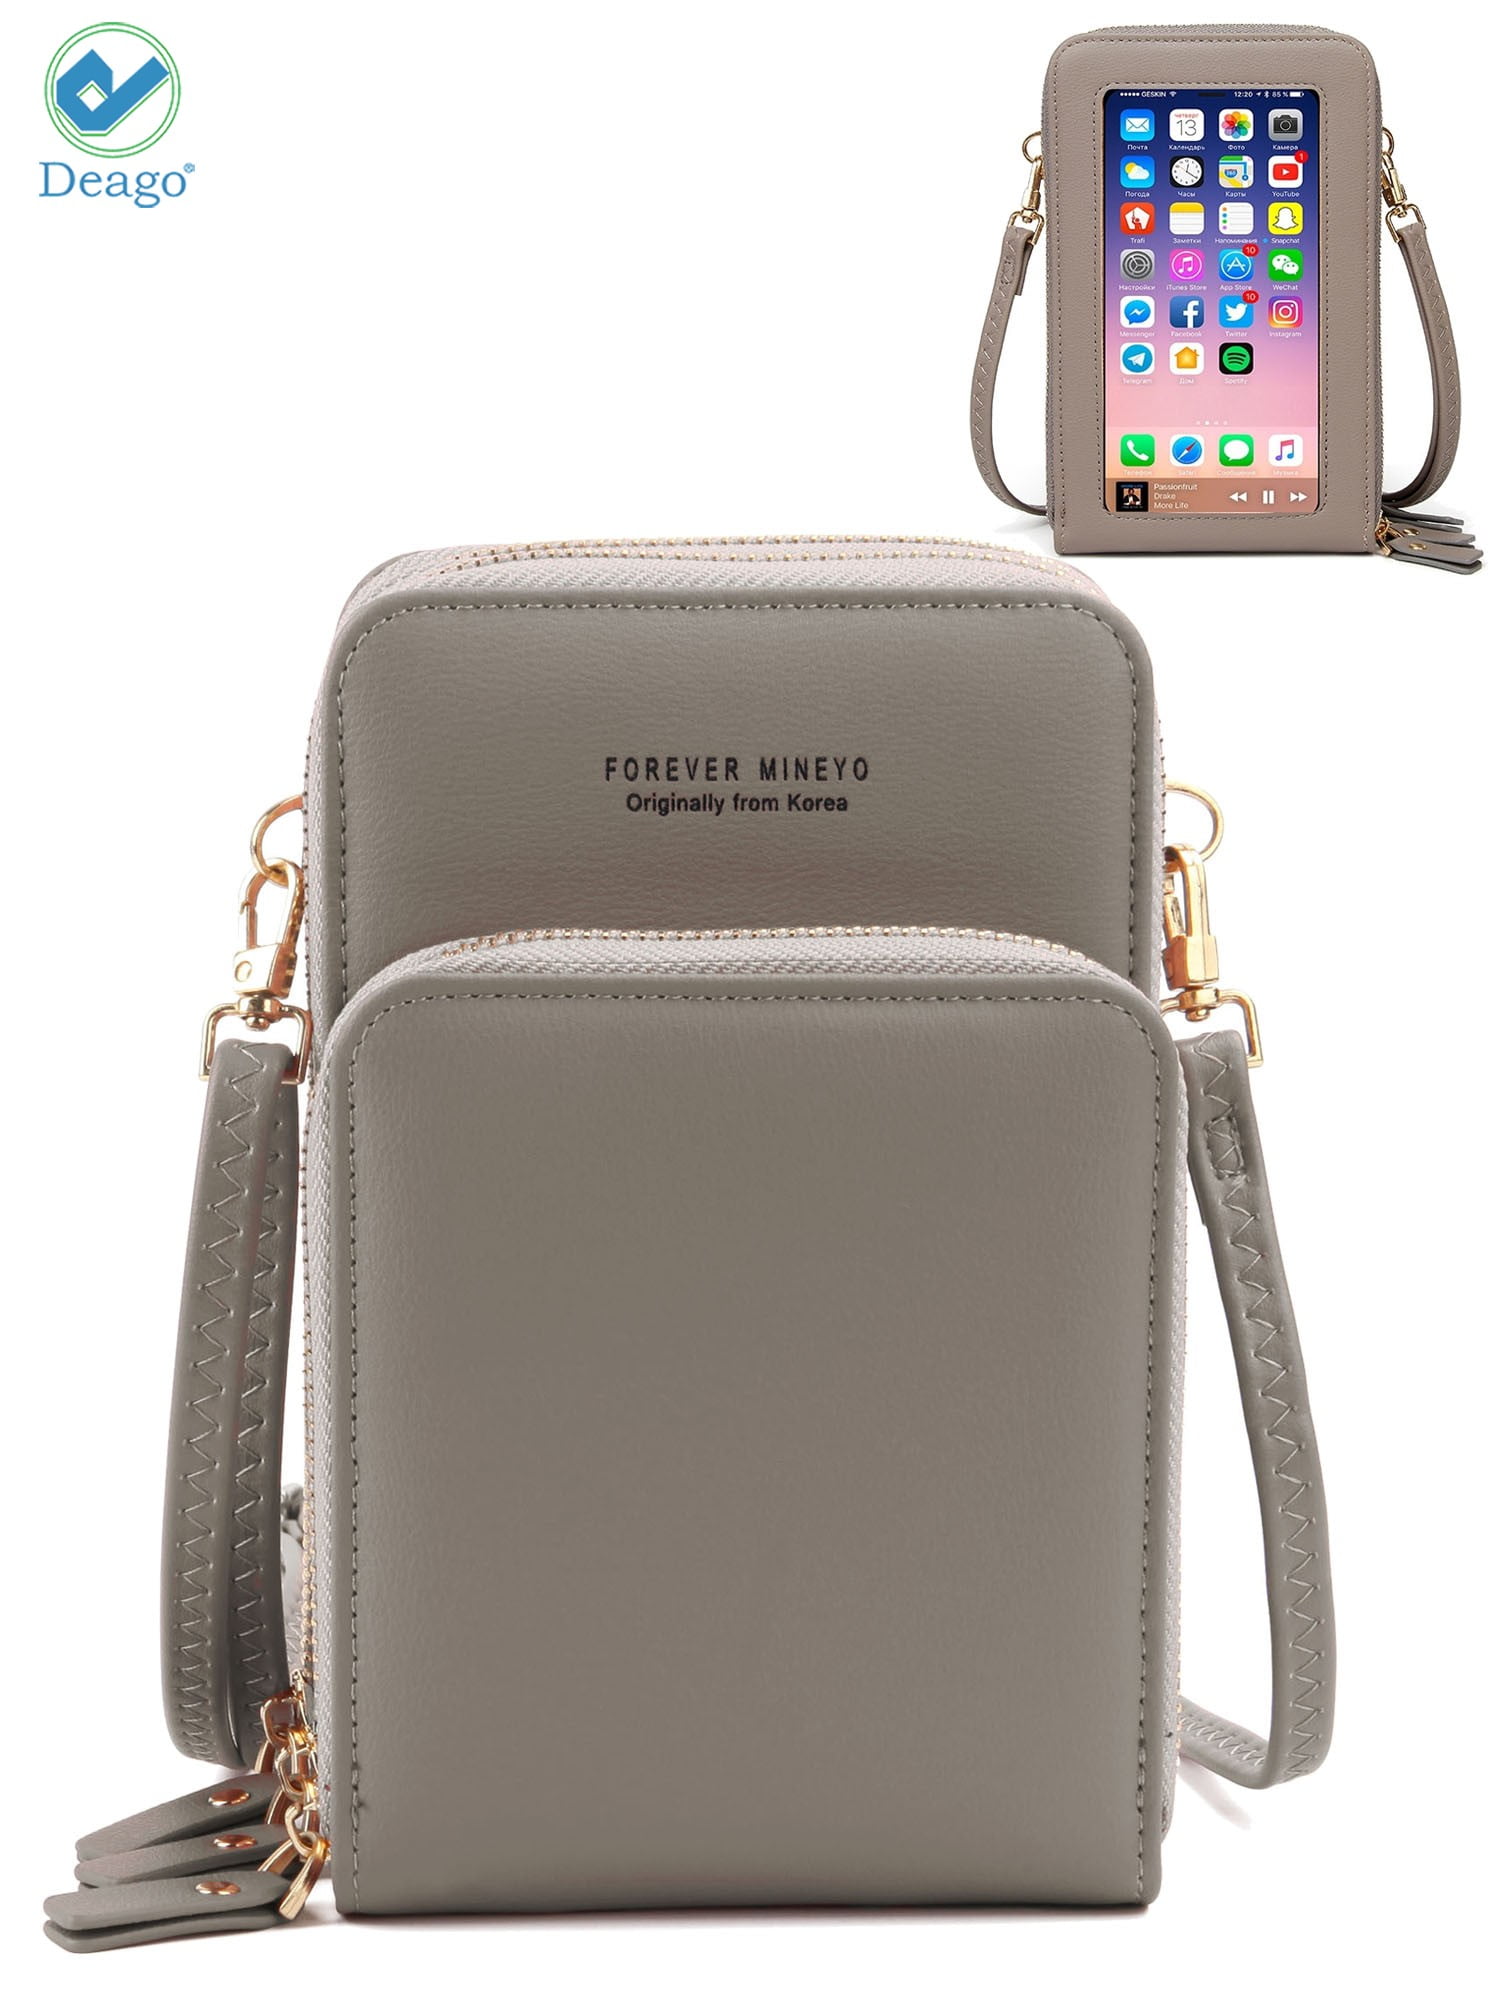 Deago Women Crossbody Cellphone Purse Touch Screen Bag RFID Blocking Wallet Handbag with Shoulder Strap Gray 021e9680 3550 4c60 a4b8 2fb197c09a4e.f9b1664fcfe40d5336db4320c7395ecf